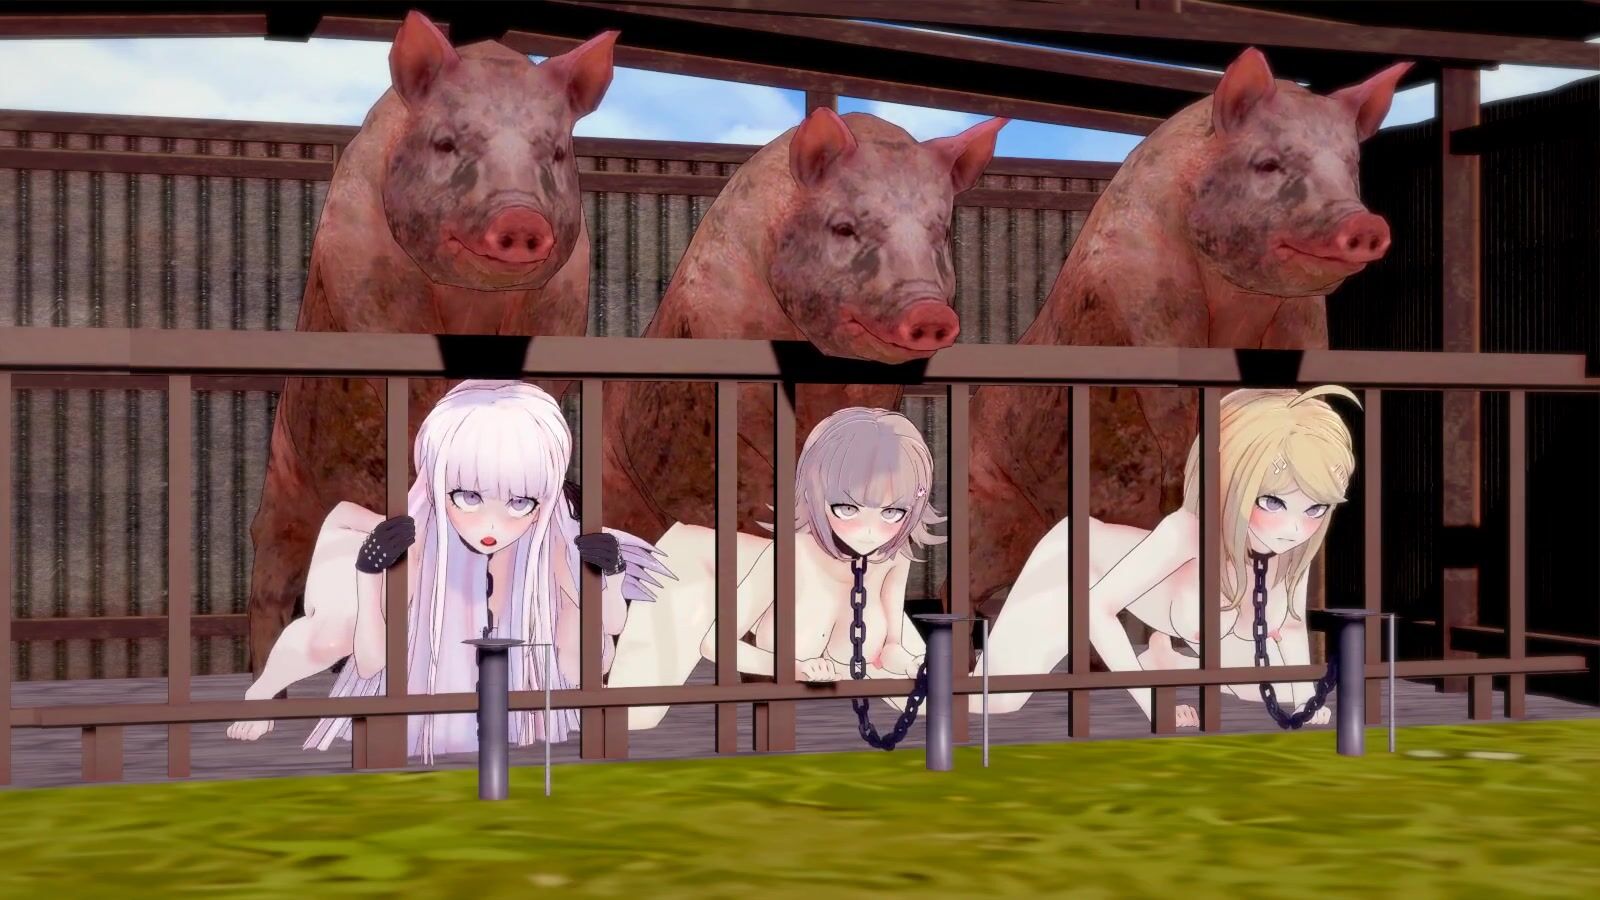 The Pigs of Despair photo